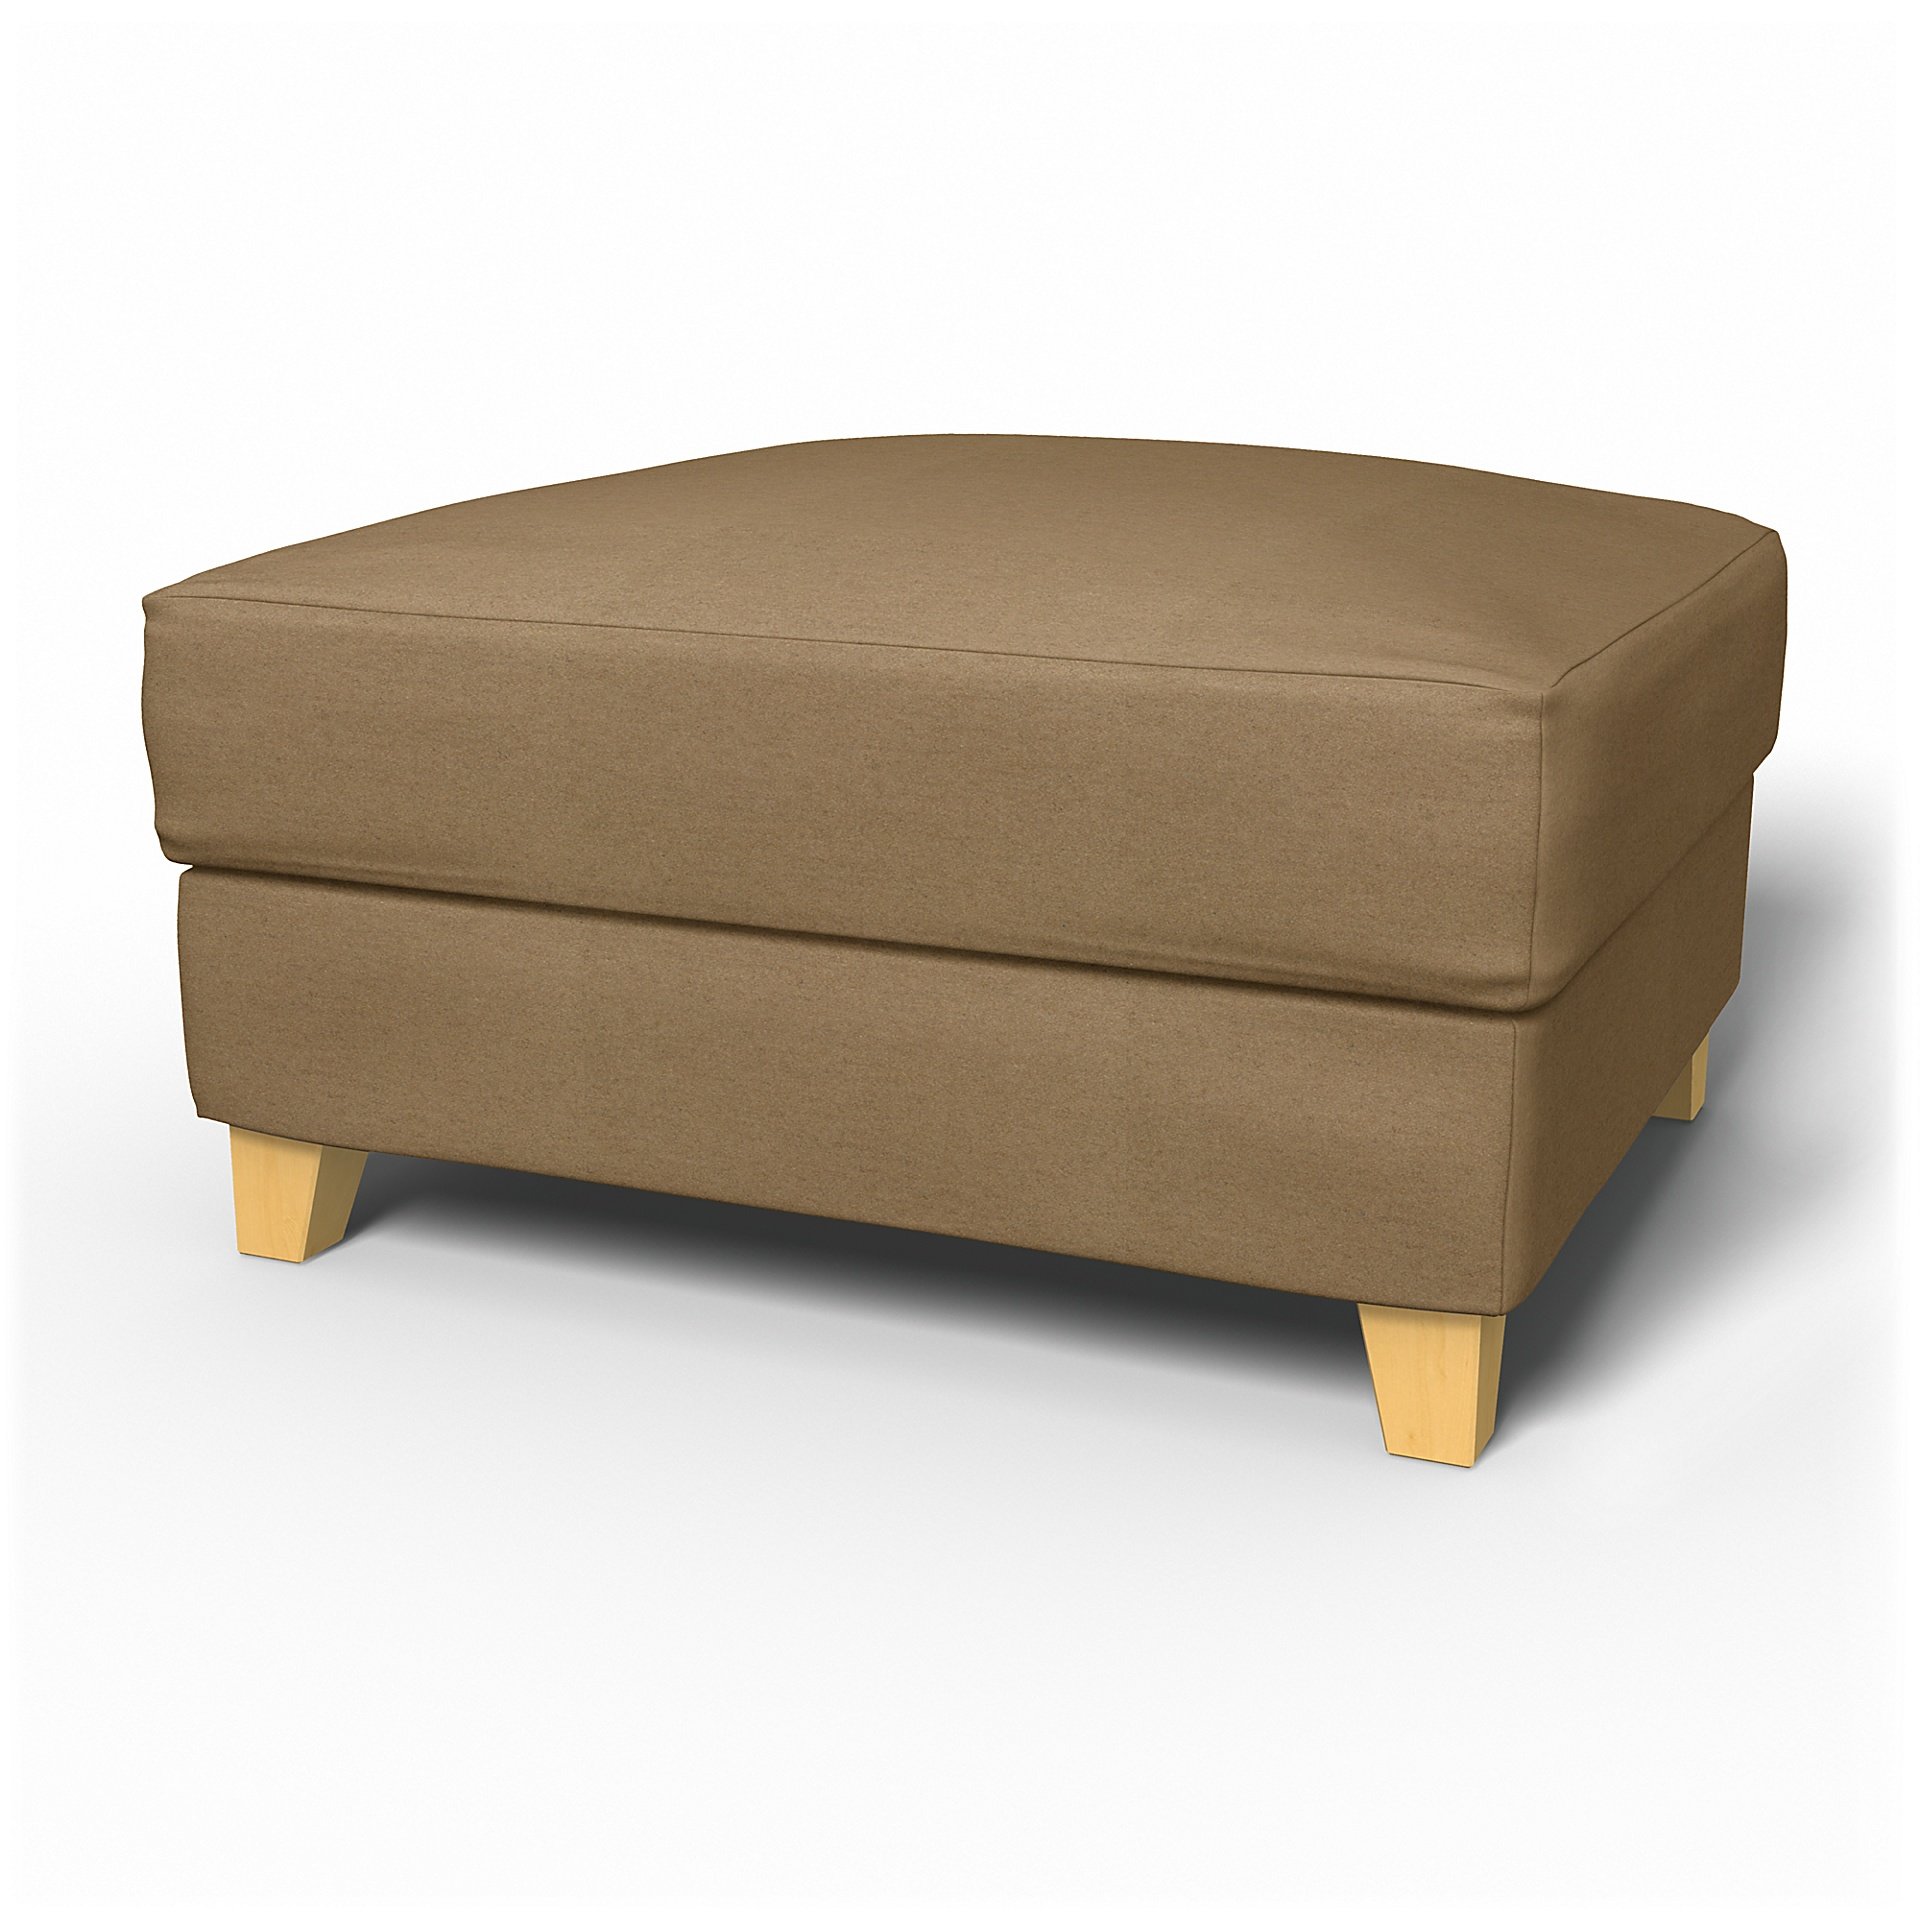 IKEA - Backa Footstool Cover, Sand, Wool - Bemz